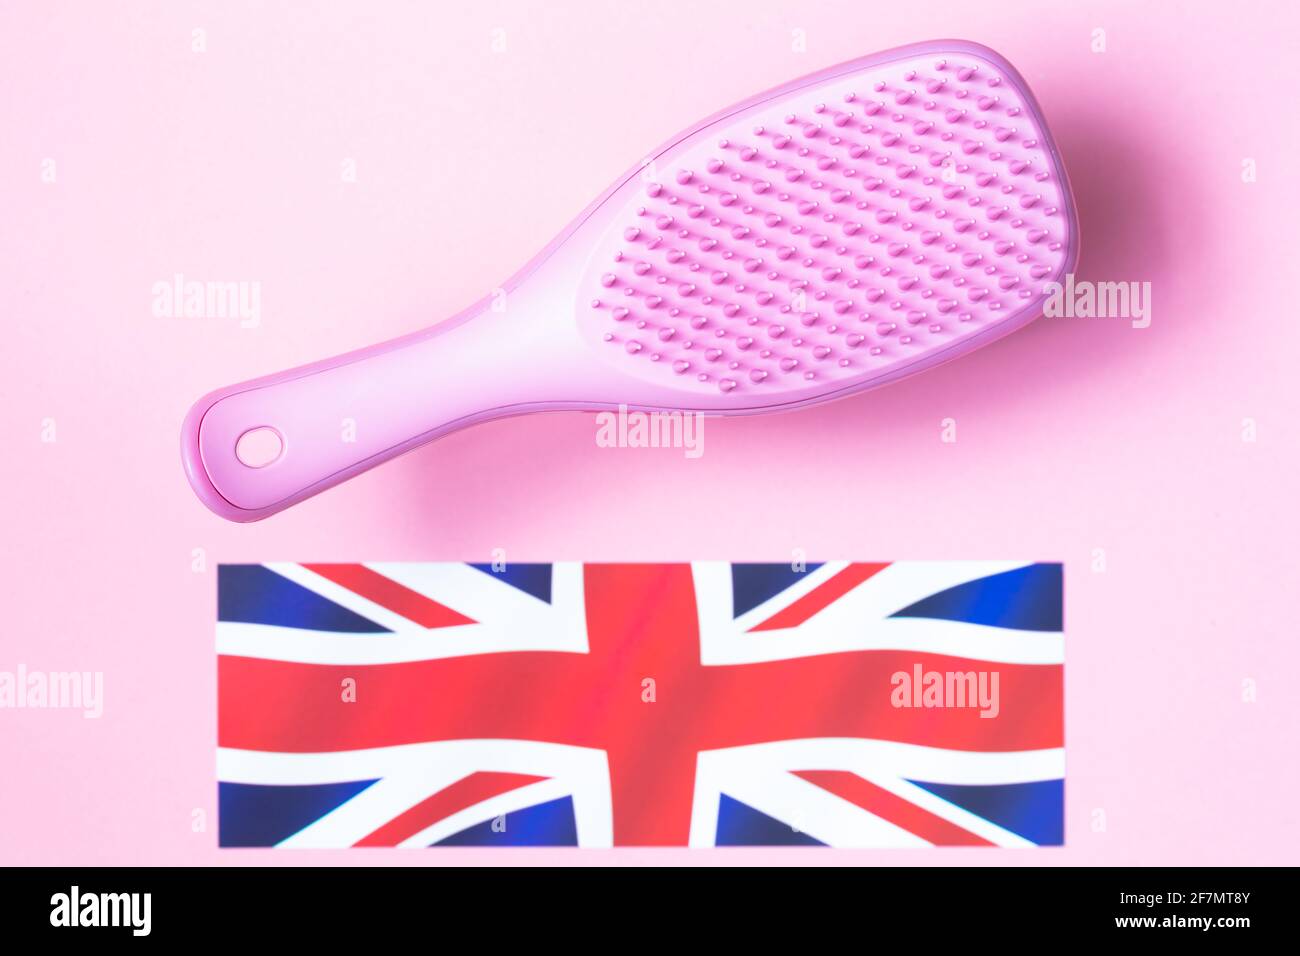 Pink hairbrush and UK flag on pink background Stock Photo